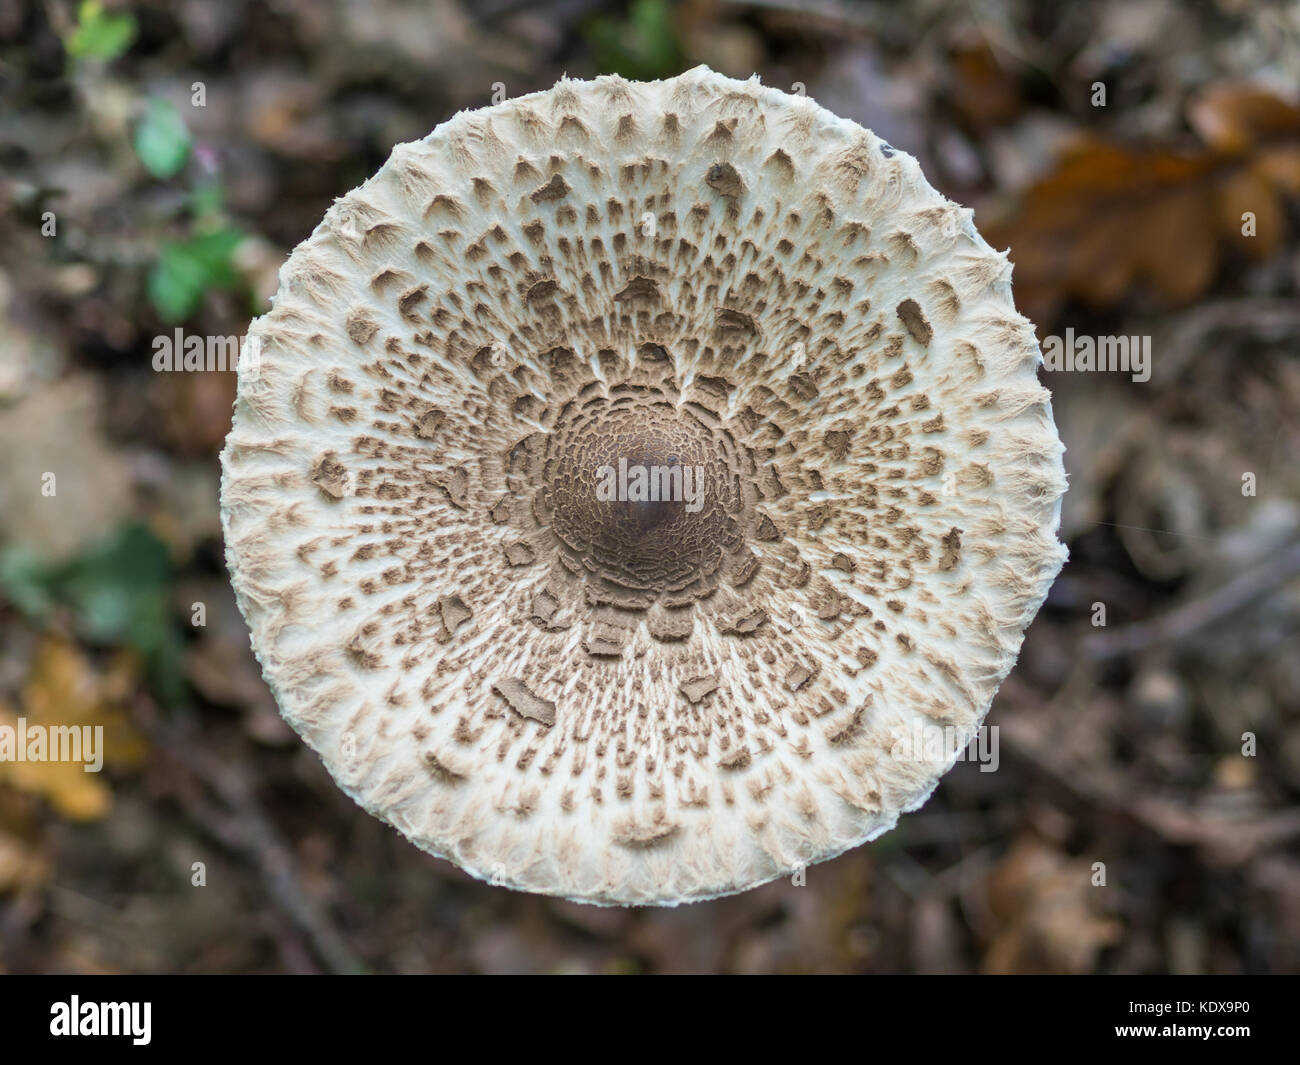 Closeup of single edible parasol mushroom or macrolepiota procera growing on forest ground, Berlin, Germany Stock Photo